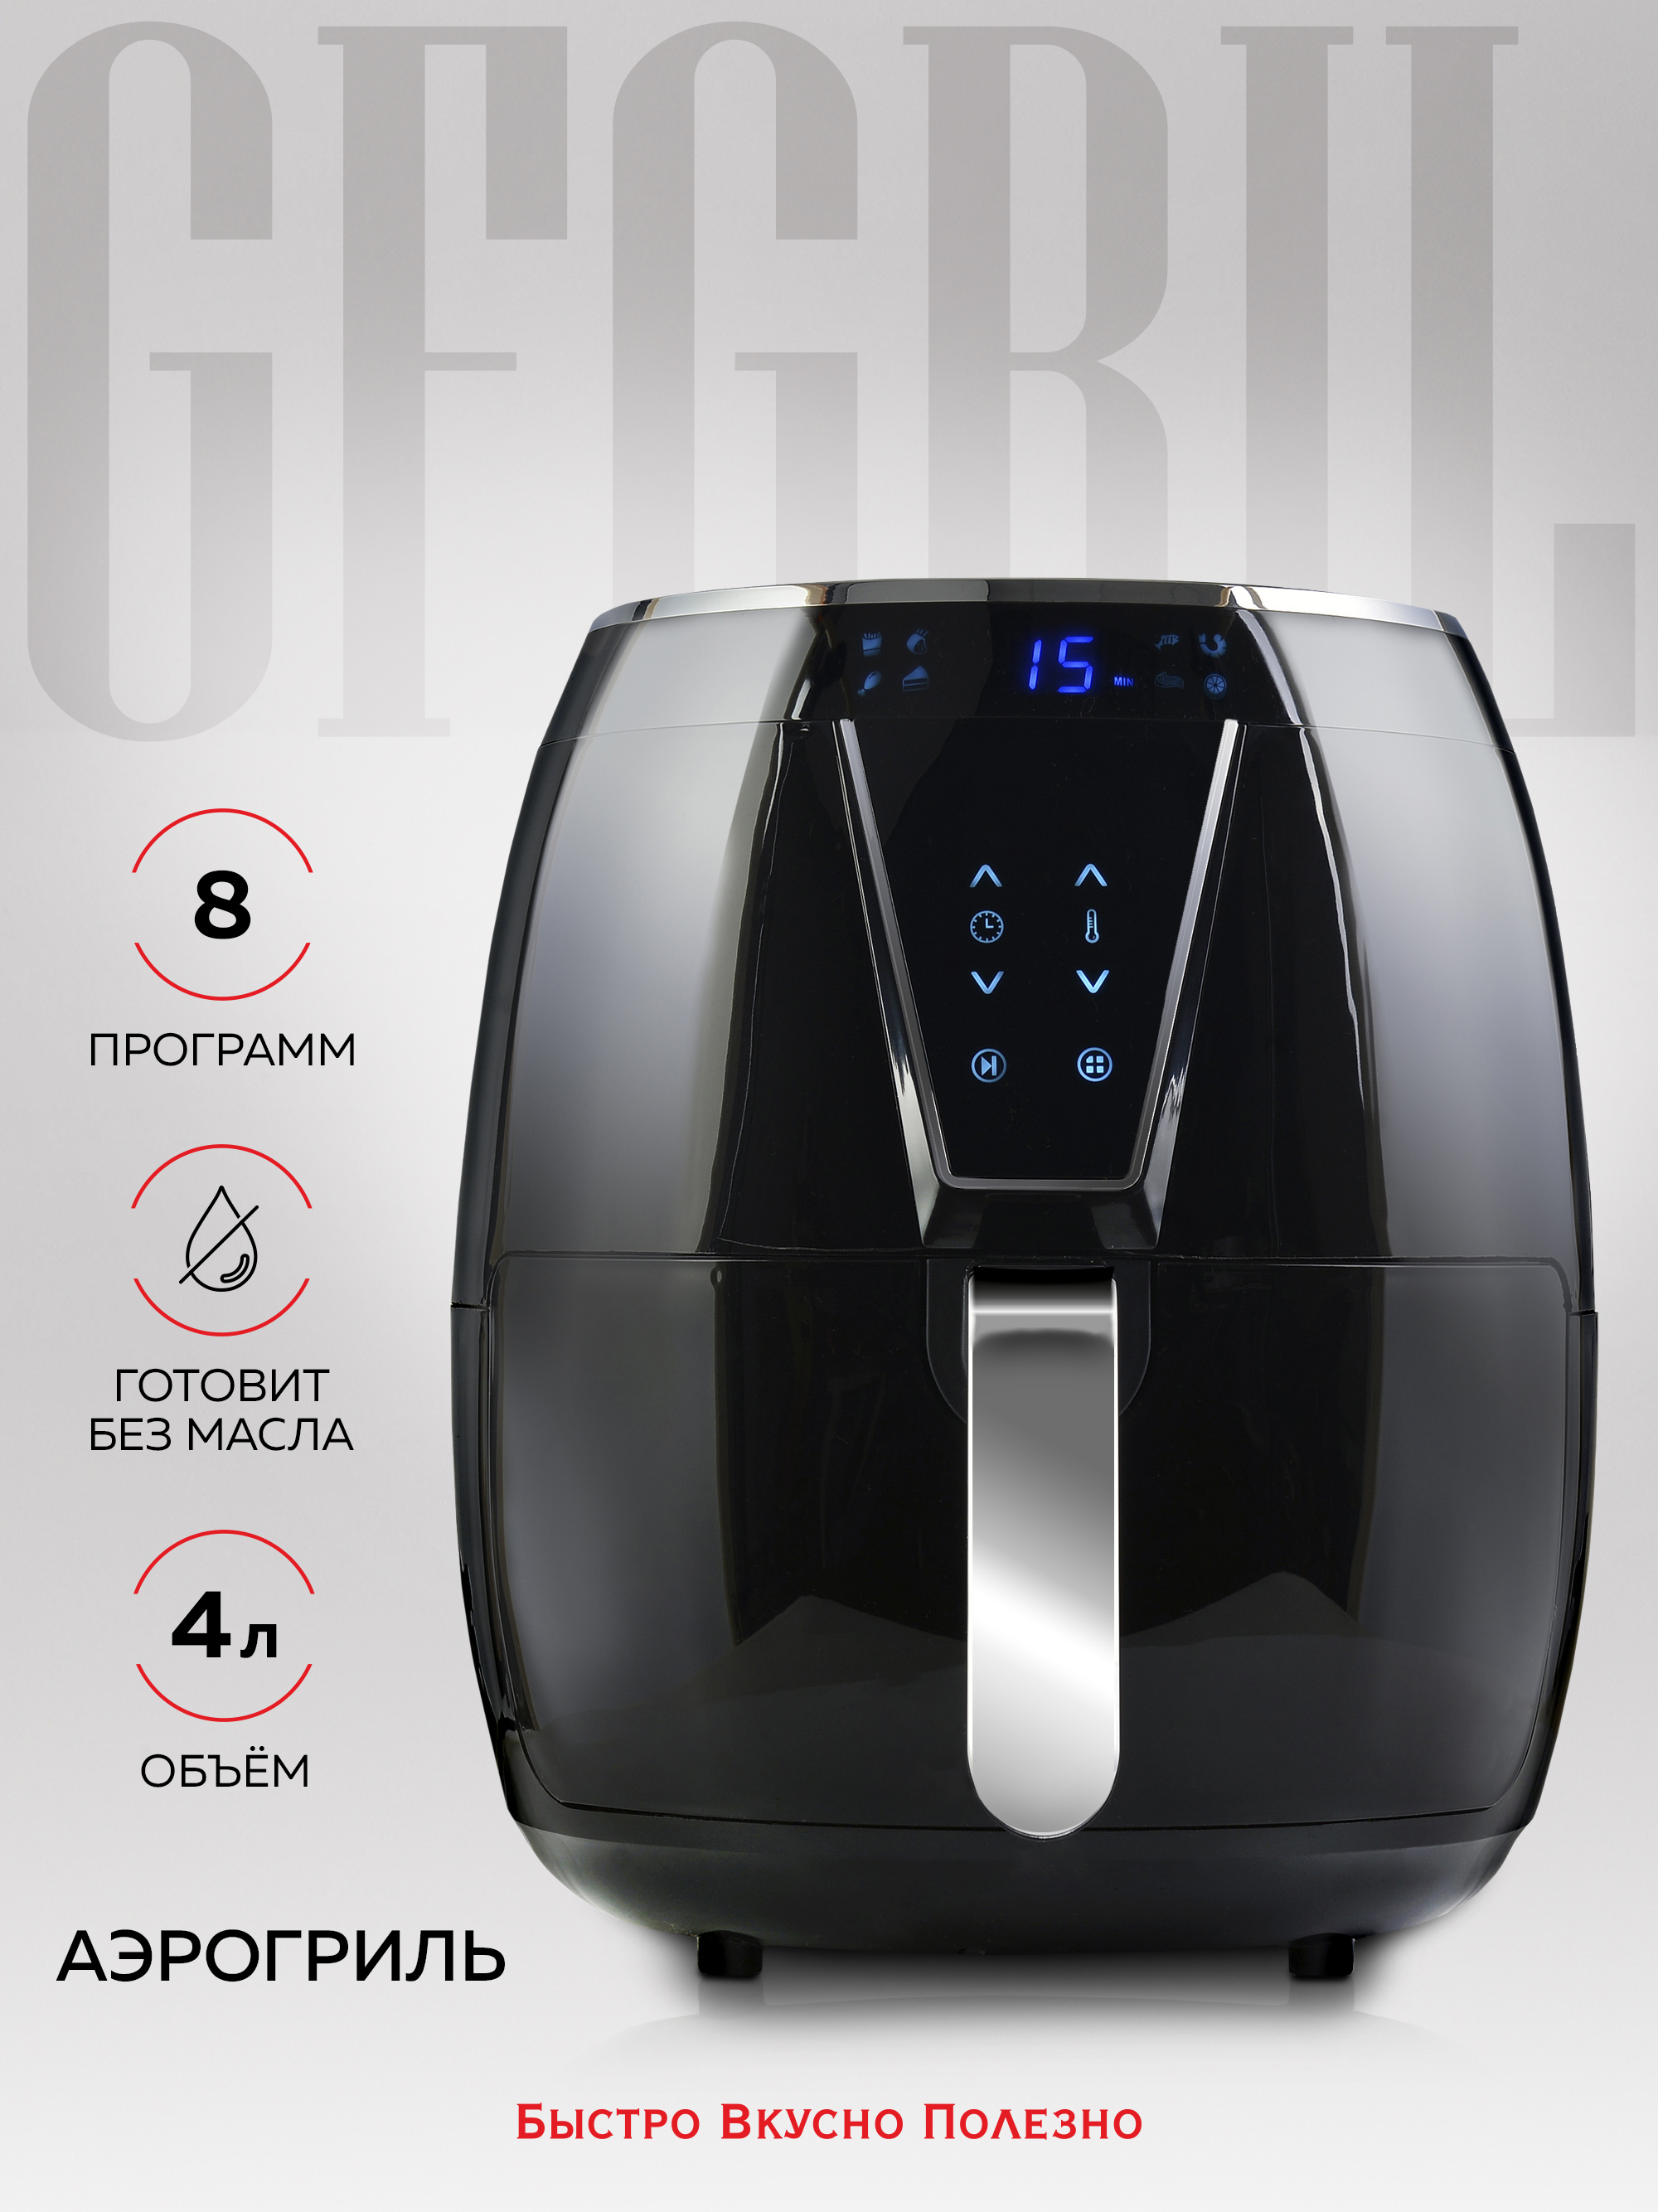  Gfgril GFA-4000 4 л 8 программ цвет черный по цене 7990 ₽/шт .